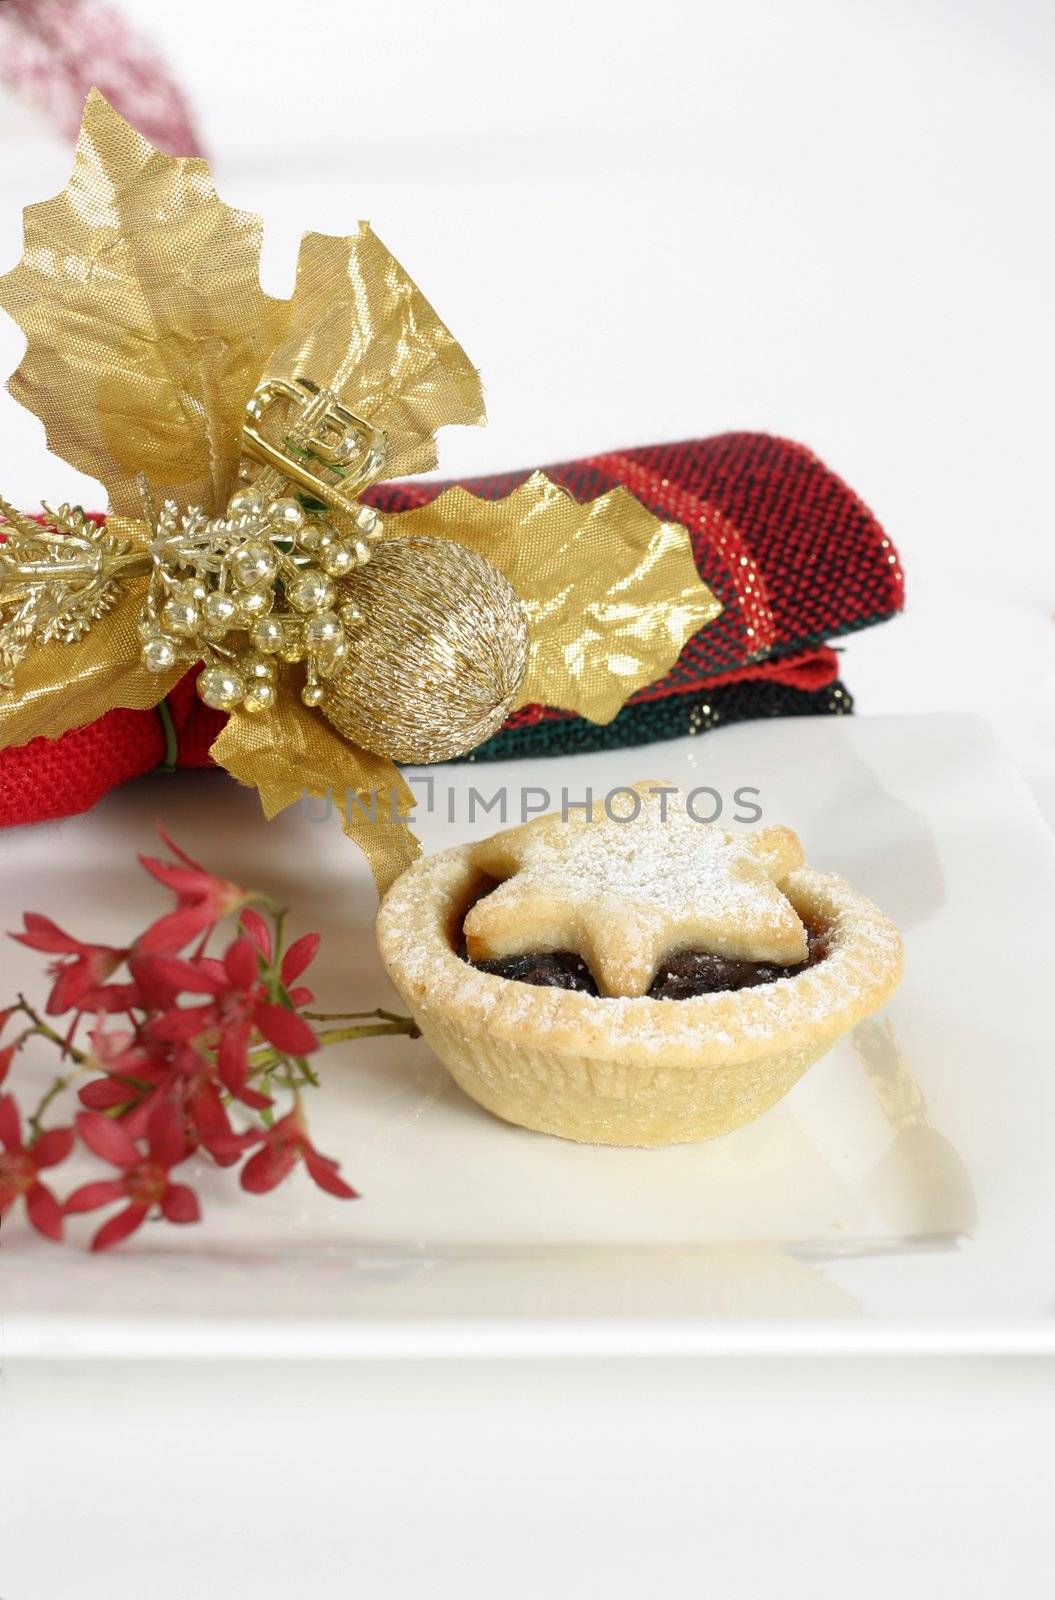 Christmas Fruit Pies by lovleah